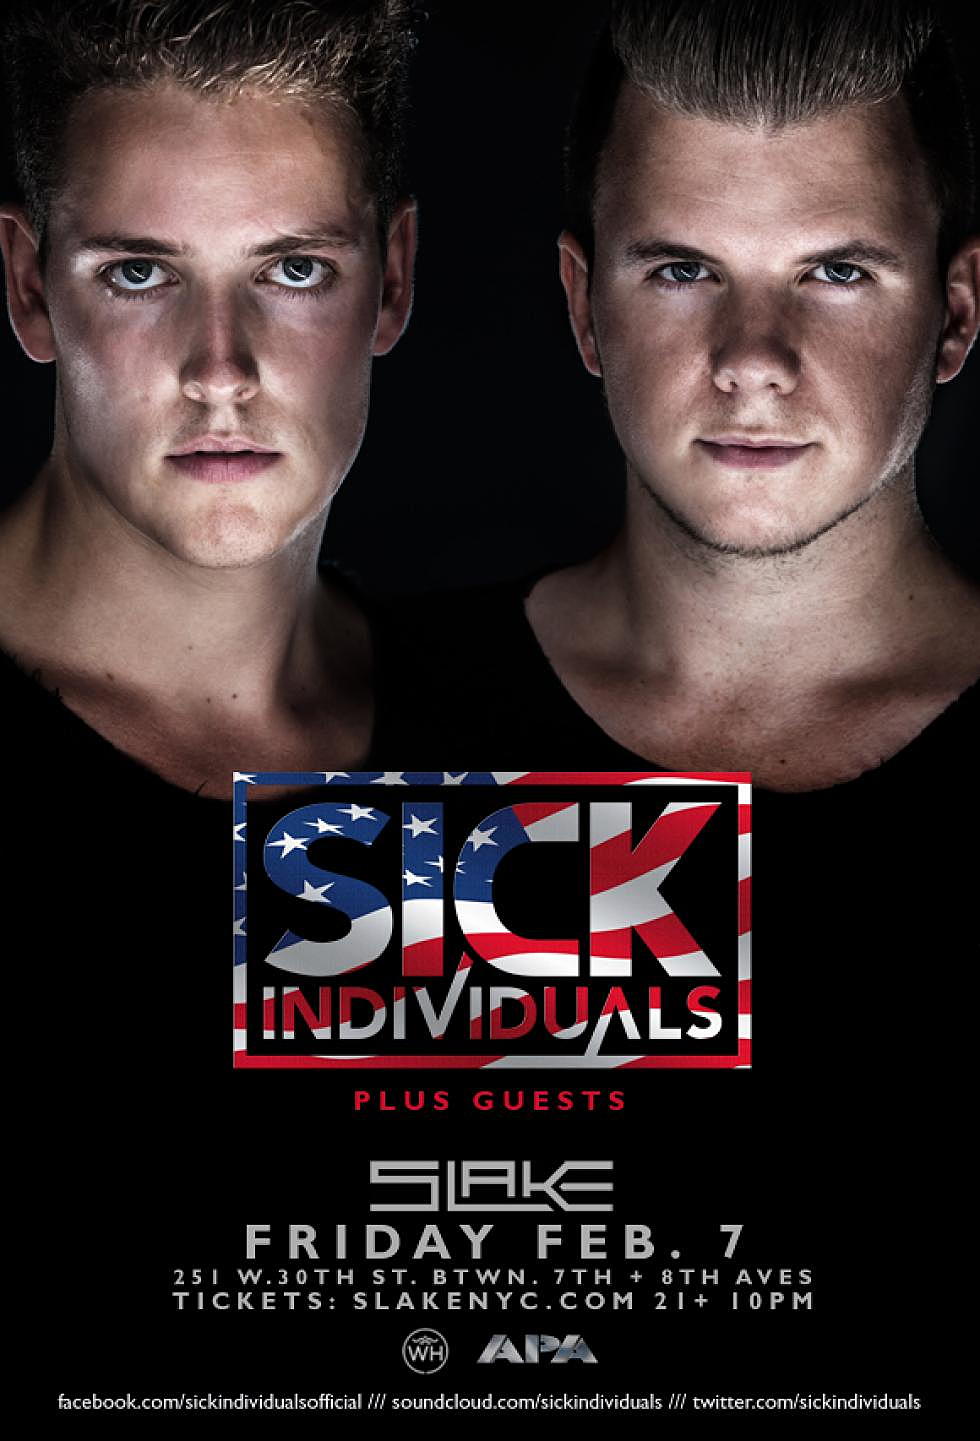 Sick Individuals take over Slake NYC this Friday, 2/7